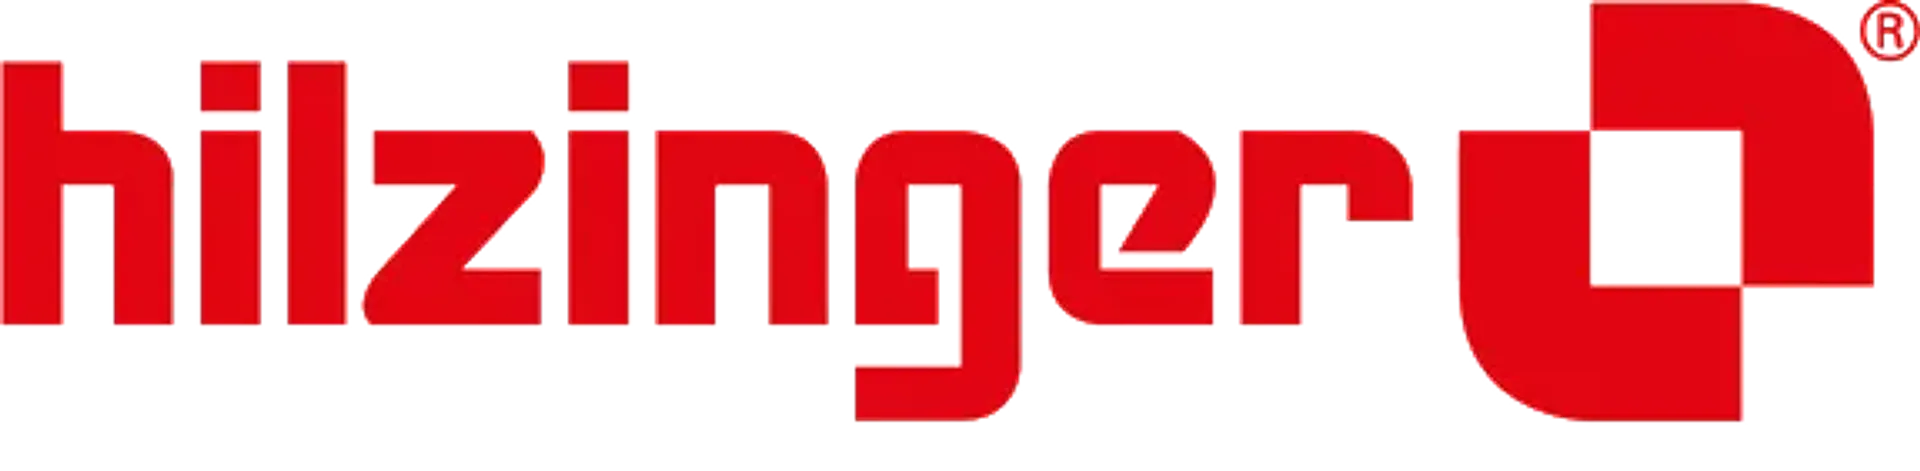 HILZINGER logo du catalogue